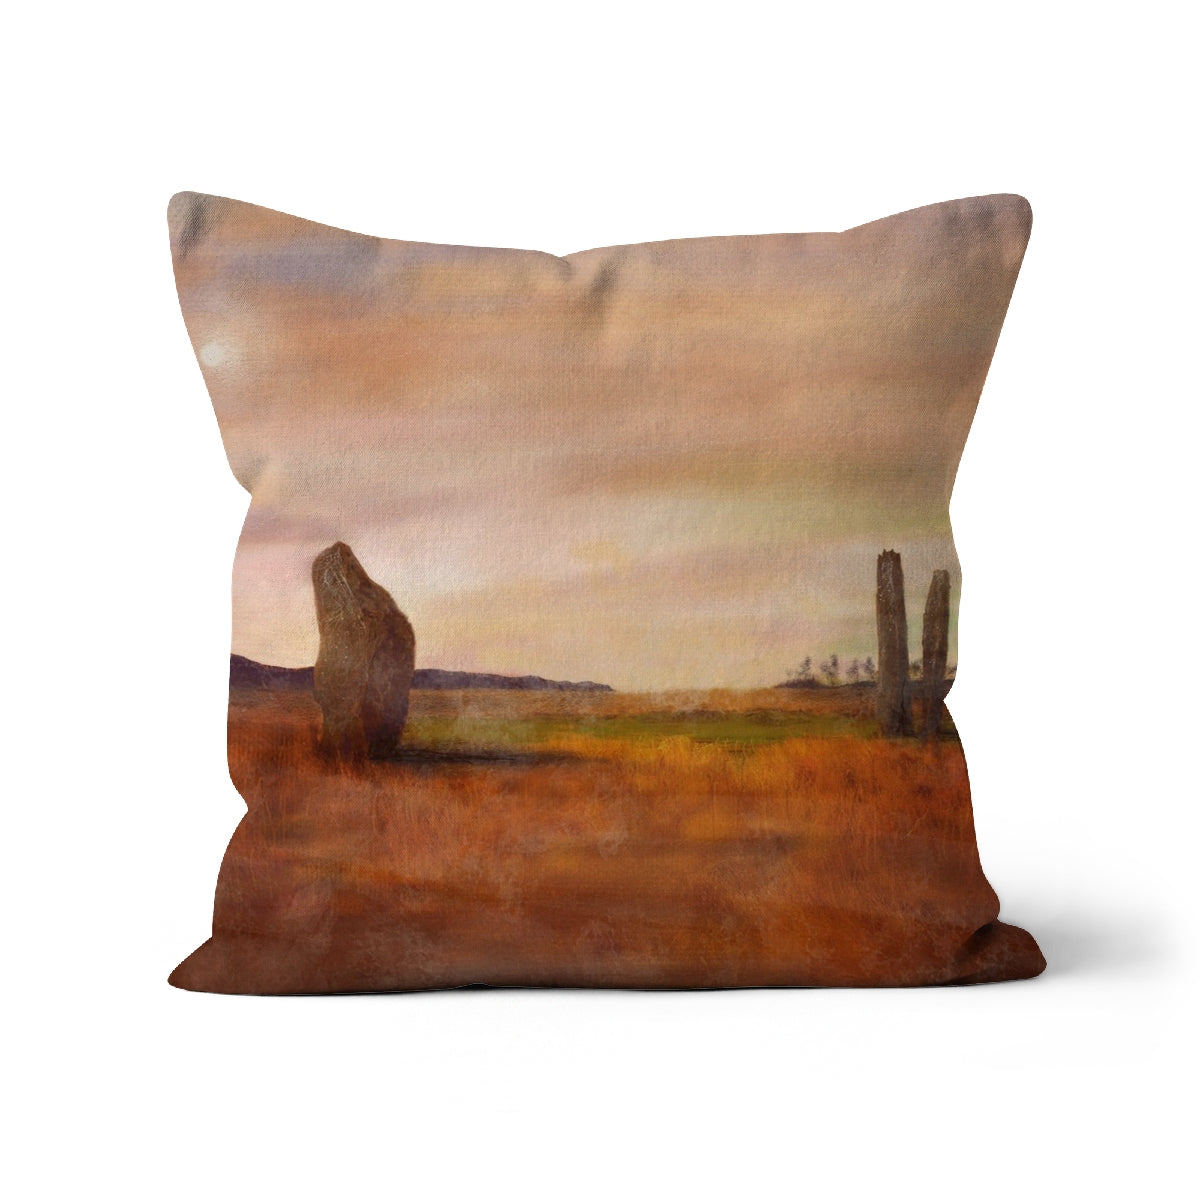 Machrie Moor Arran Art Gifts Cushion-Cushions-Arran Art Gallery-Linen-22"x22"-Paintings, Prints, Homeware, Art Gifts From Scotland By Scottish Artist Kevin Hunter